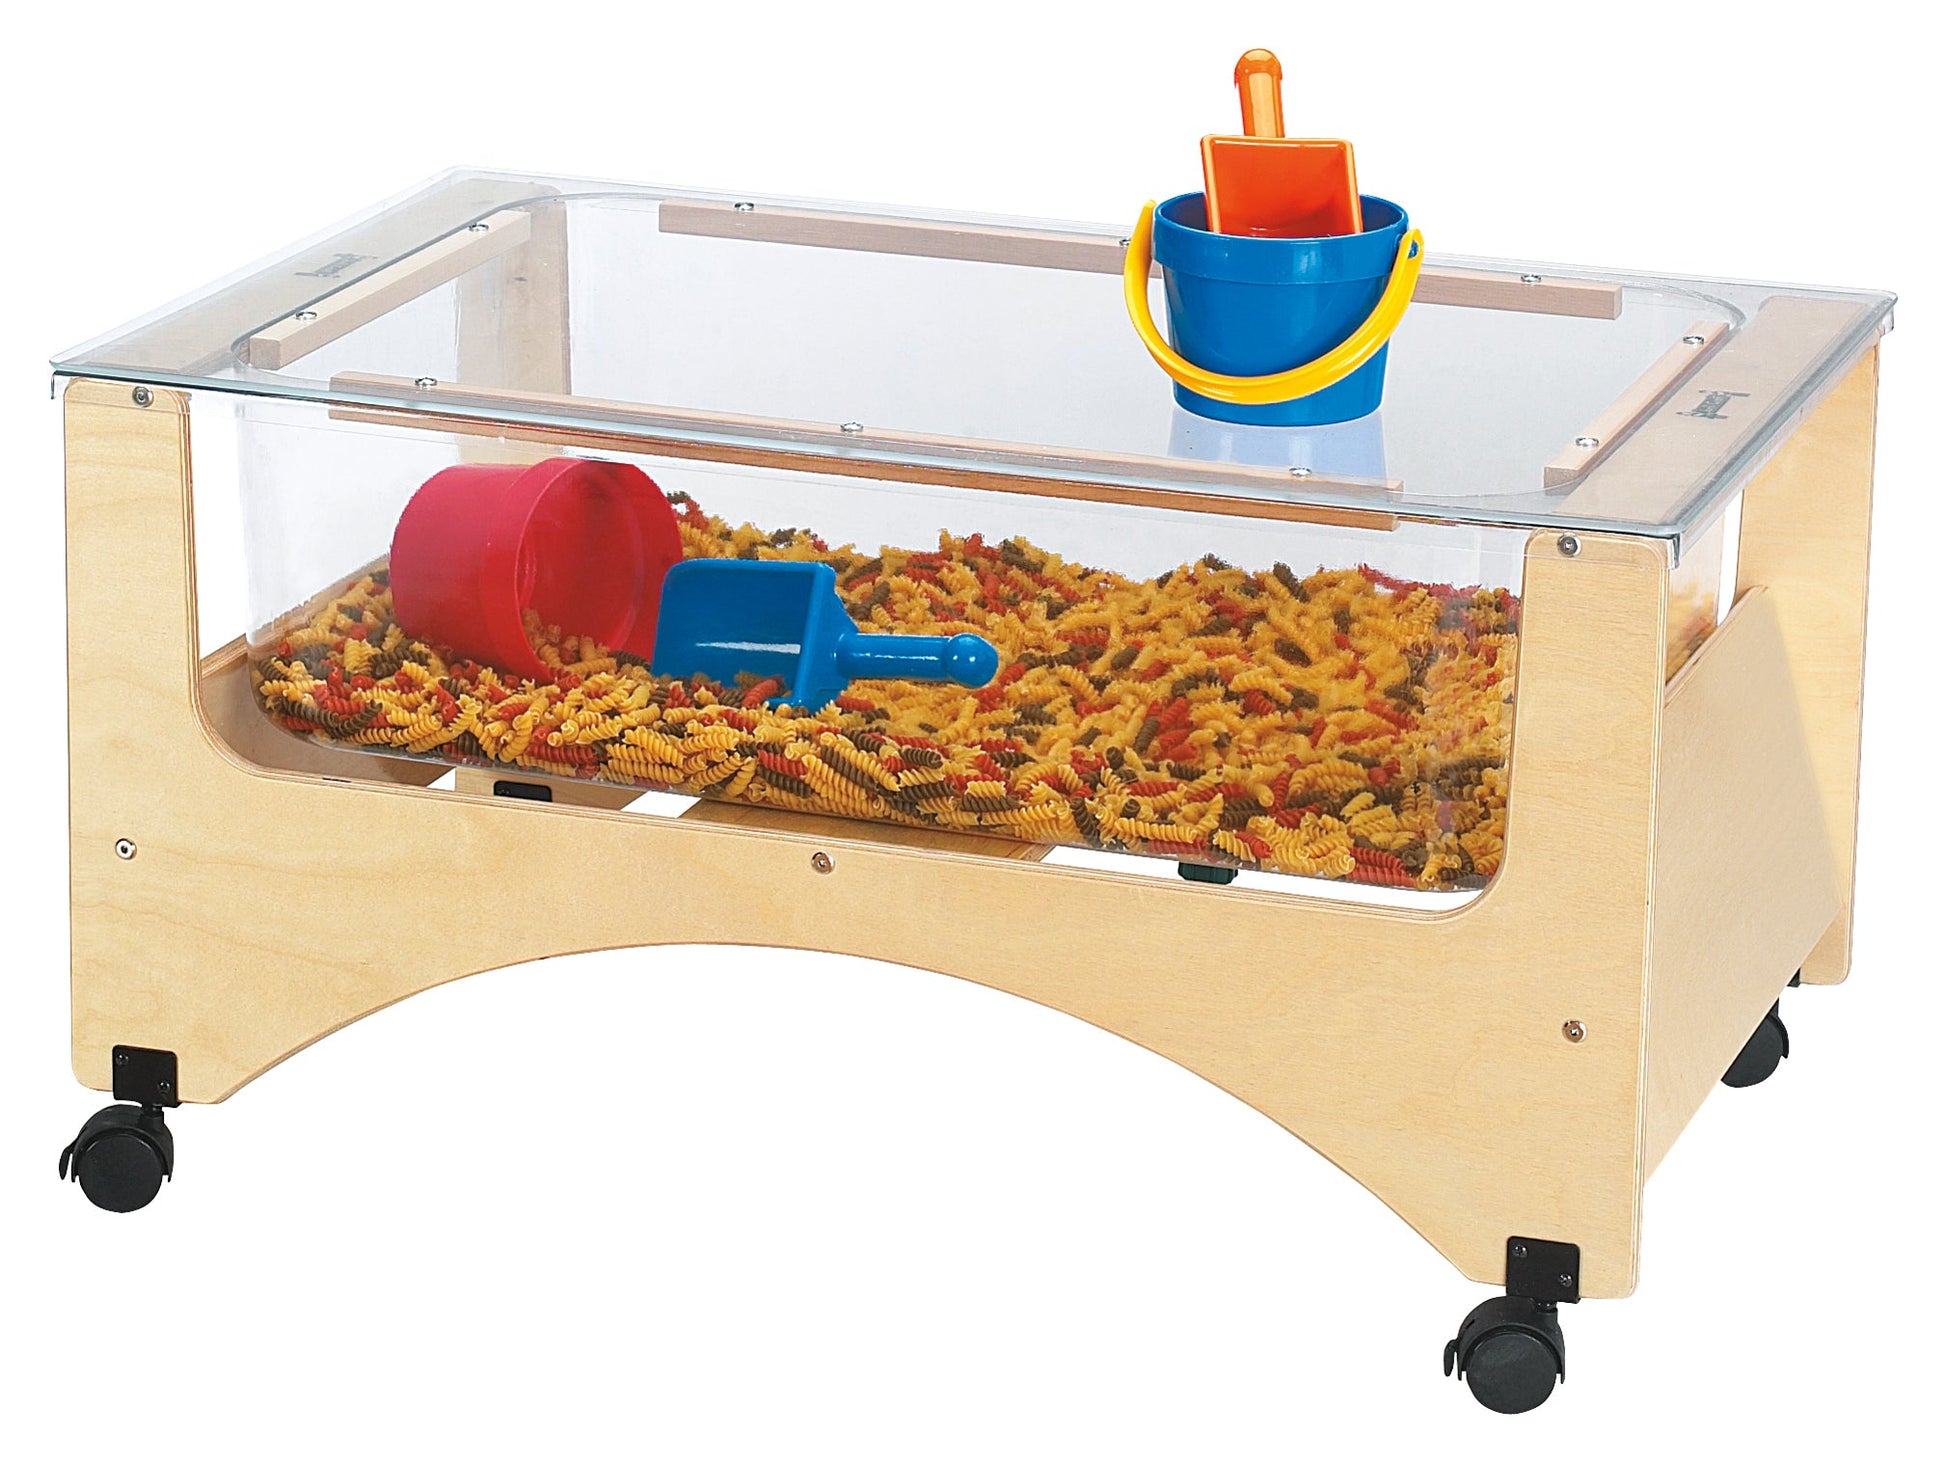 Jonti-Craft See-Thru Sensory Table 20"-Toddler (Jonti-Craft JON-2872JC) - SchoolOutlet